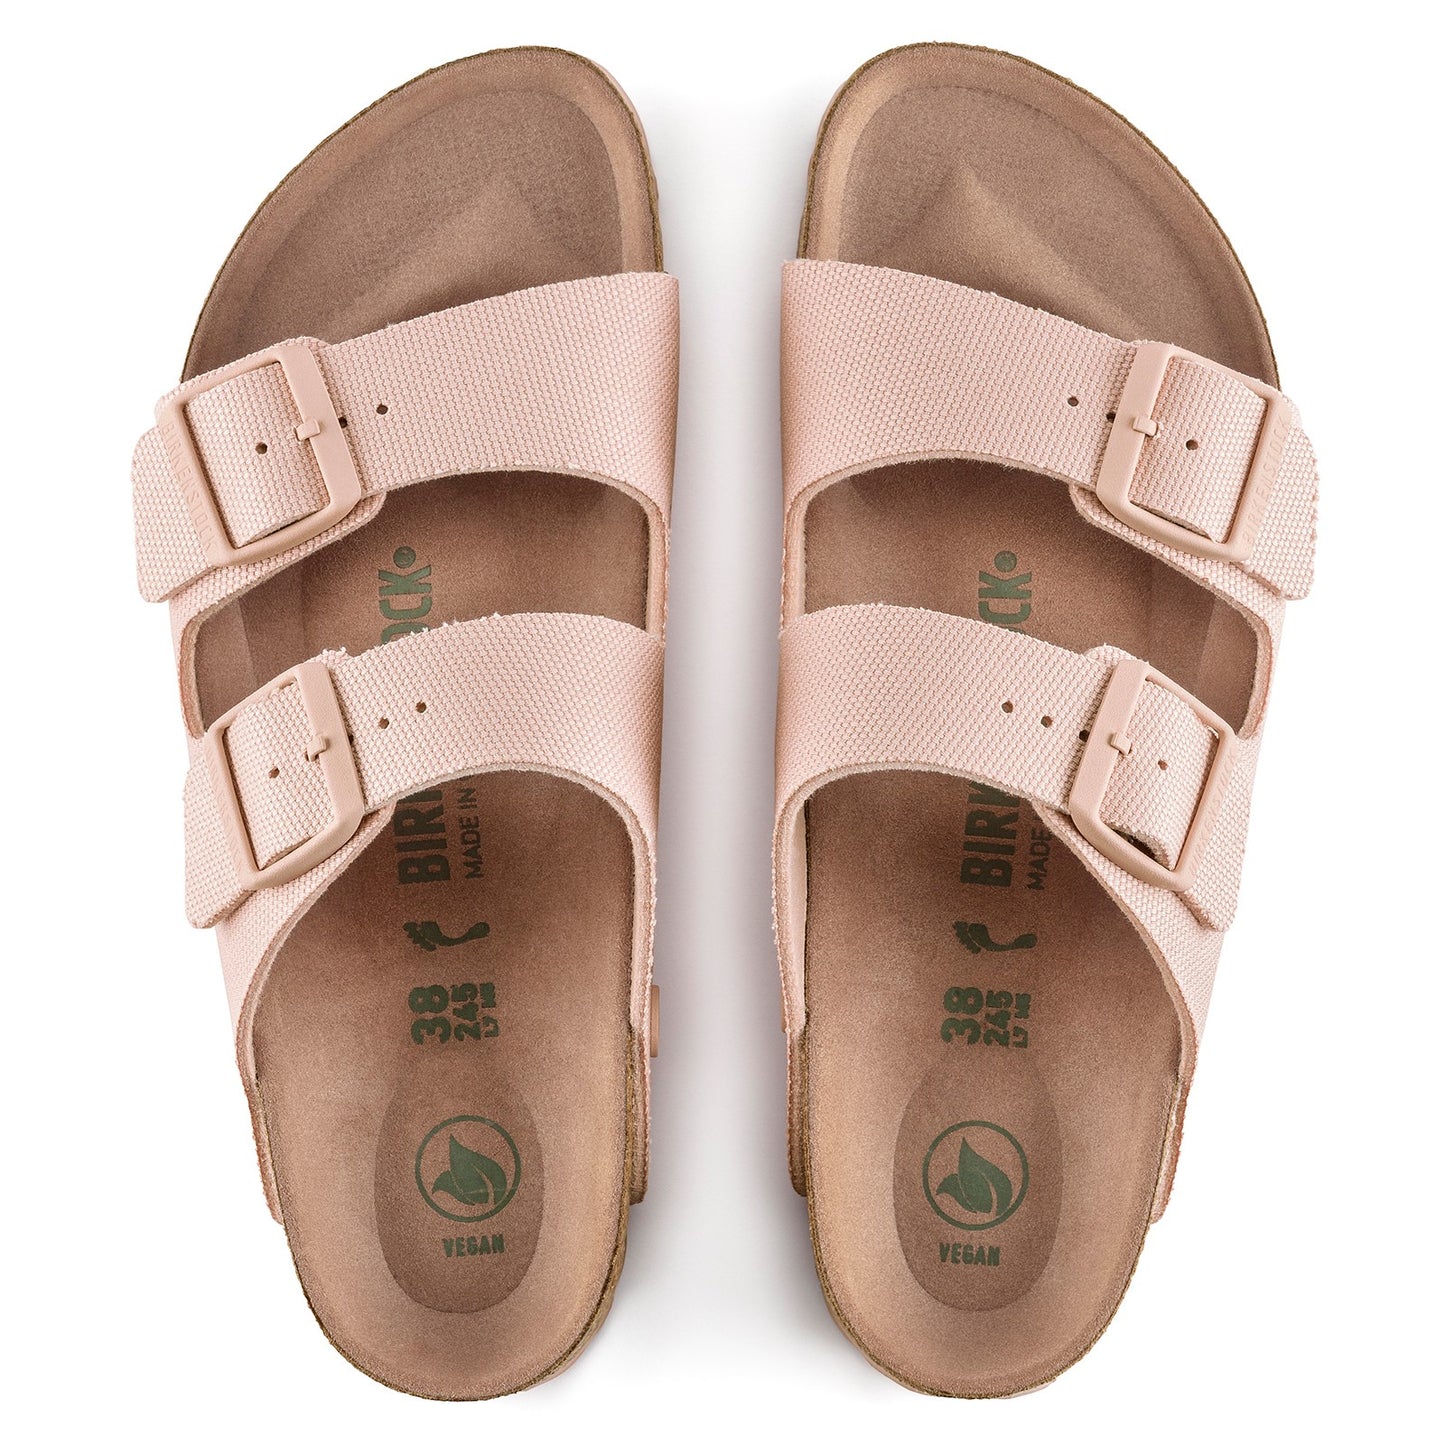 Peltz Shoes  Women's Birkenstock Arizona Vegan Slide Sandal - Narrow Width SOFT PINK 1021 473 N